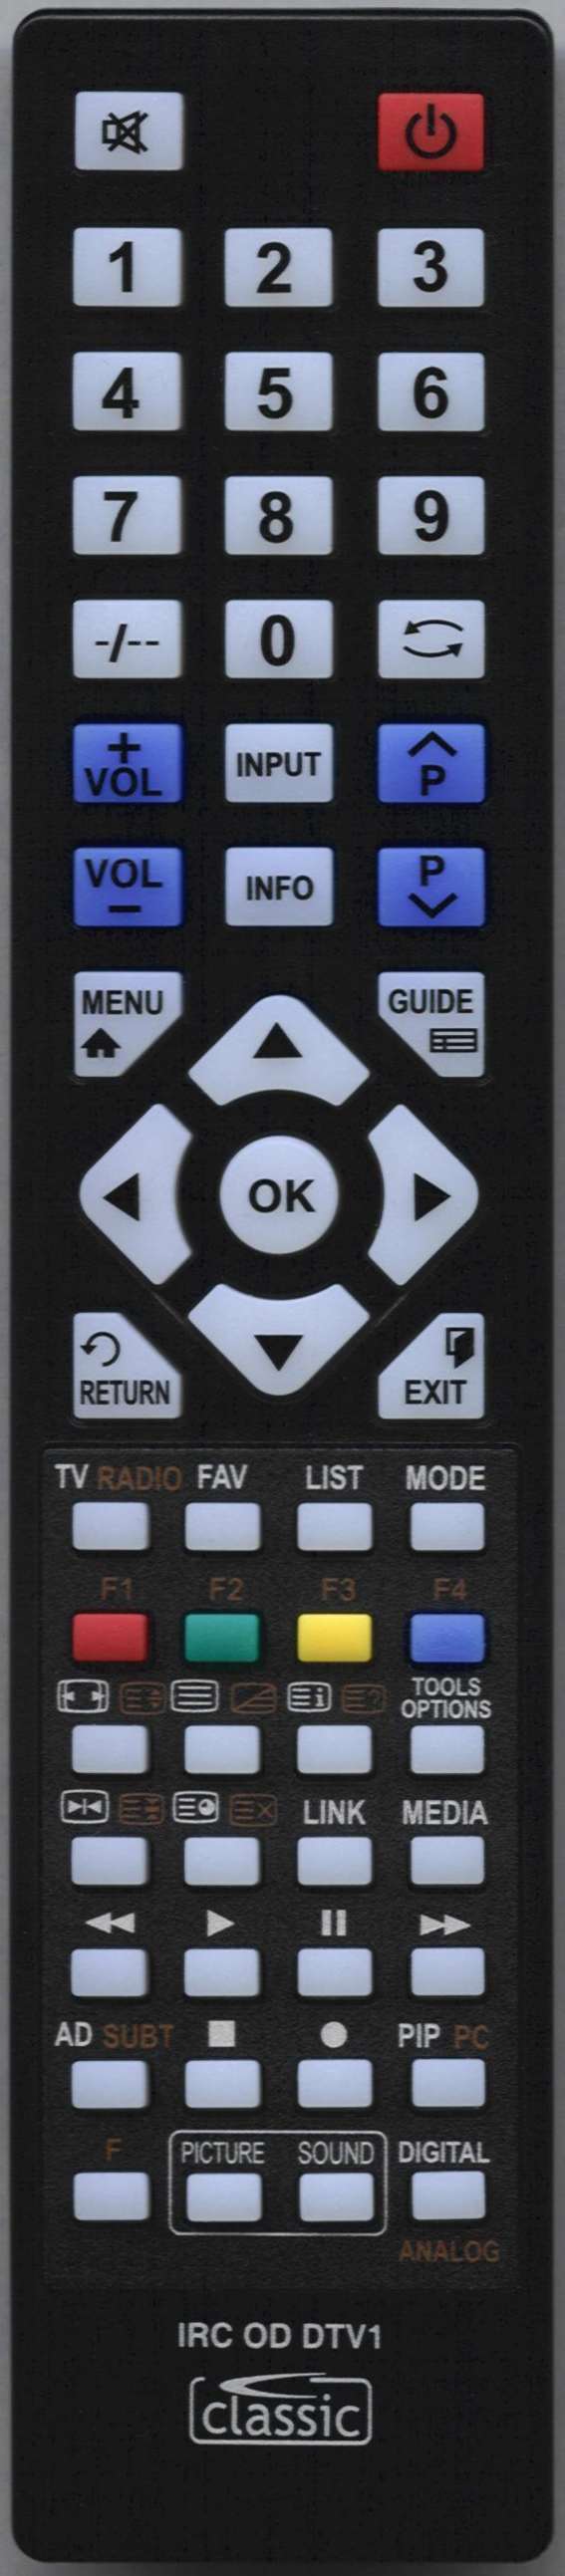 Beko 21411 ND Remote Control